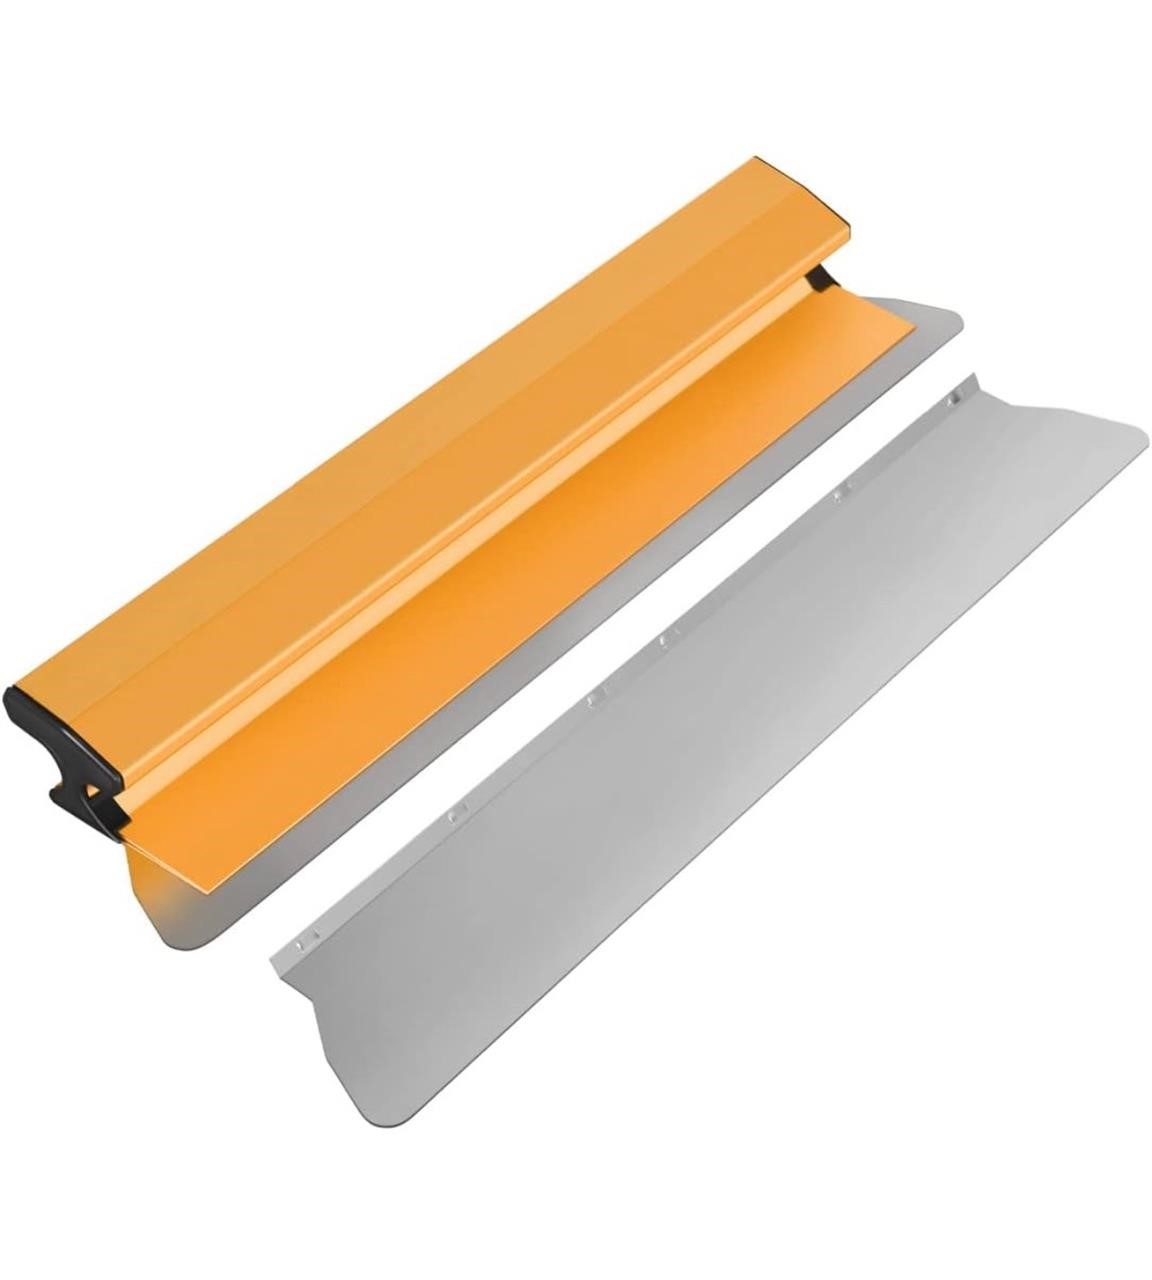 NEW $50 (24") Drywall Skimming Blade